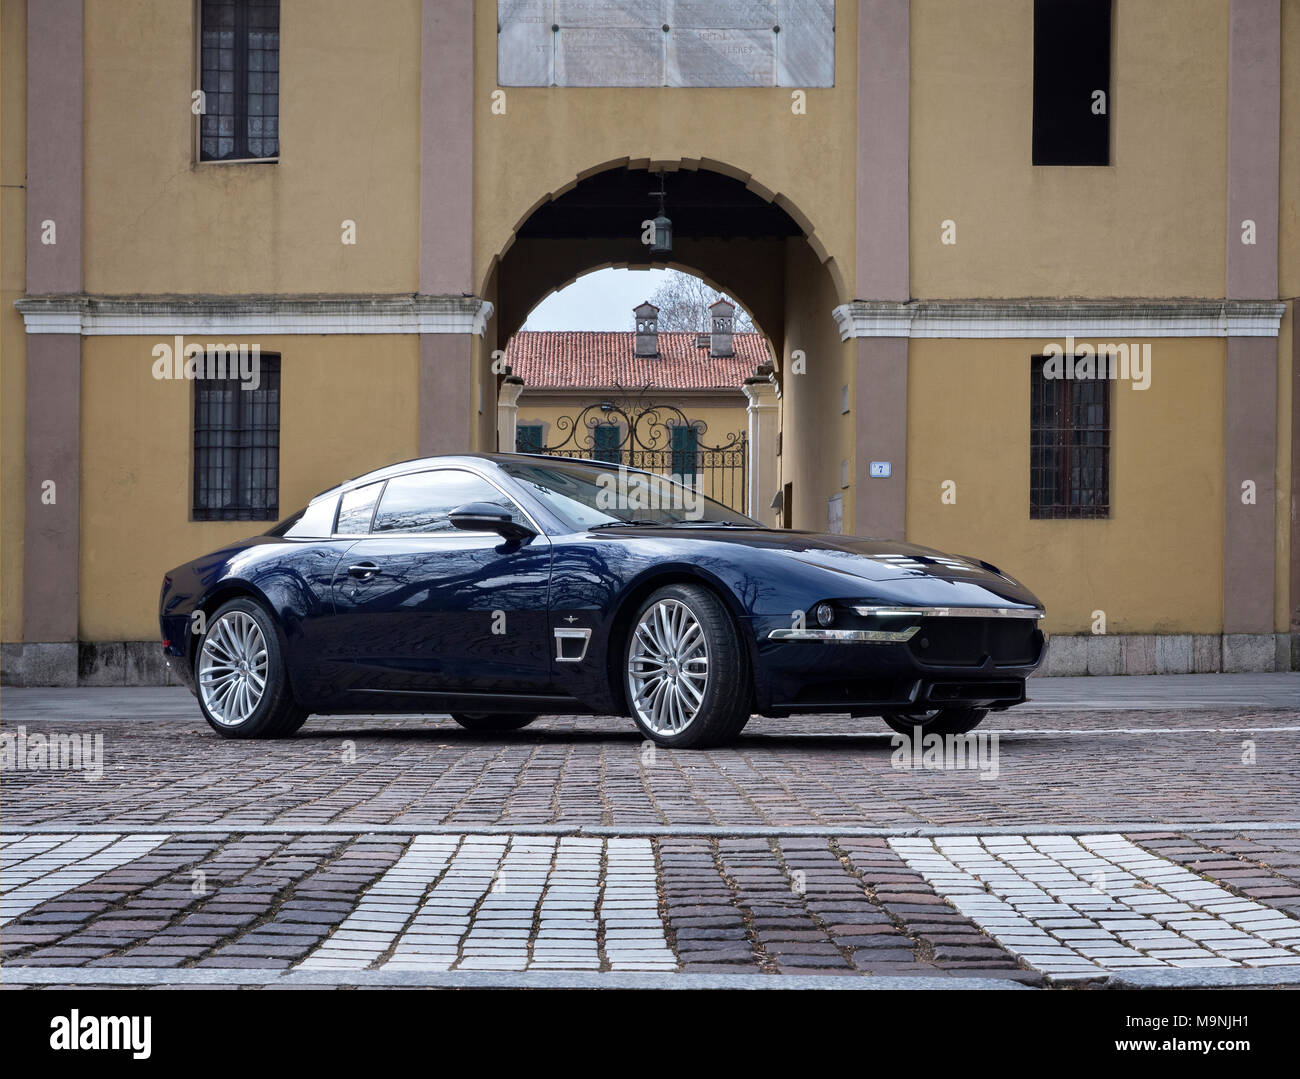 Touring Maserati Sciadipersia 2018. Location Milan Italy Stock Photo